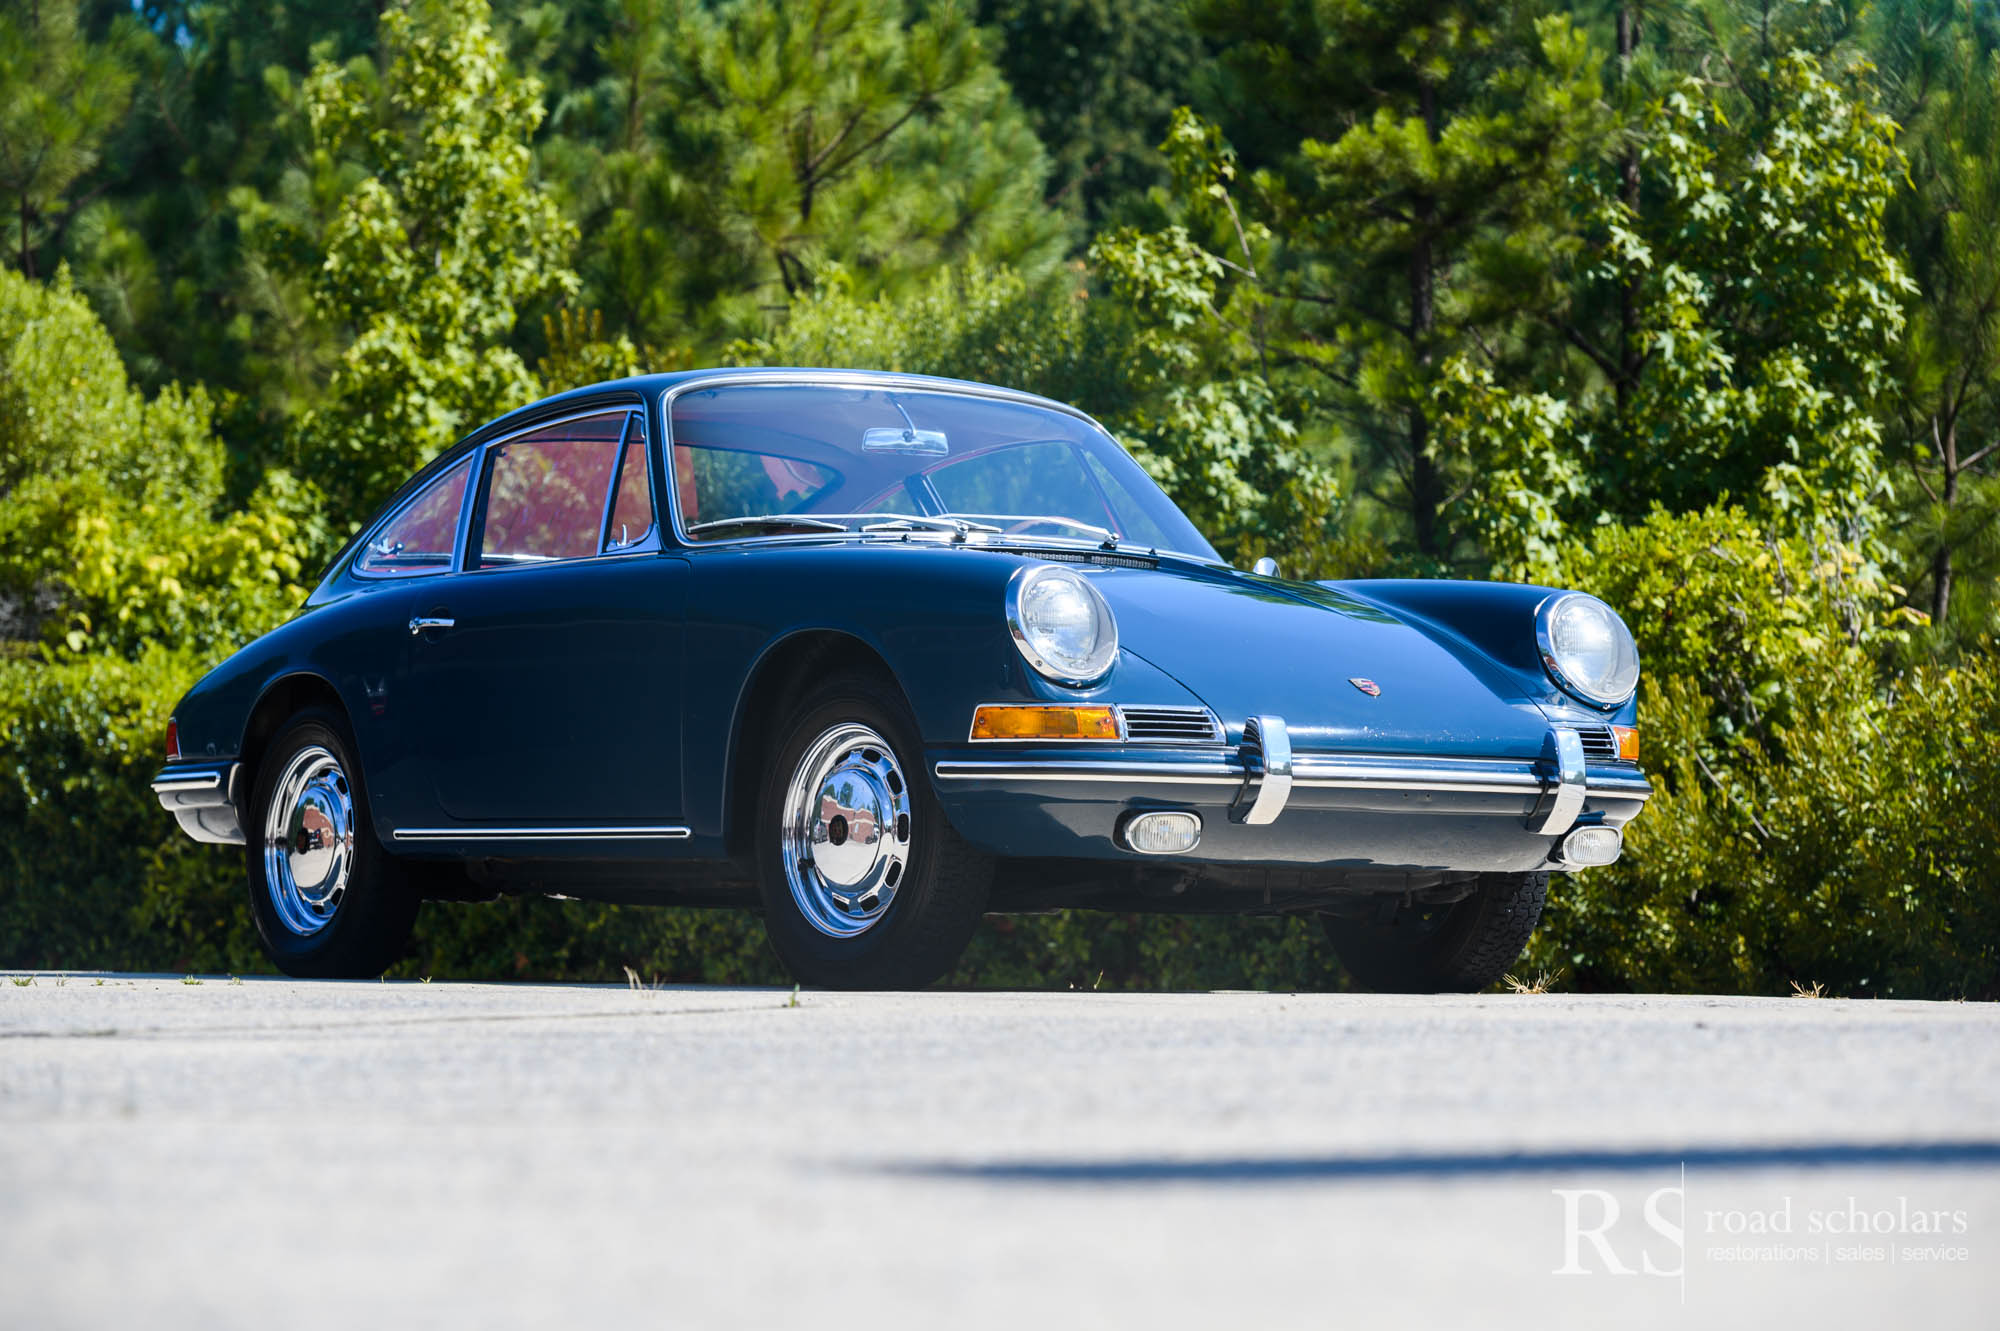 1966 Porsche 911 - Road Scholars - Vintage Porsche Sales and Restoration